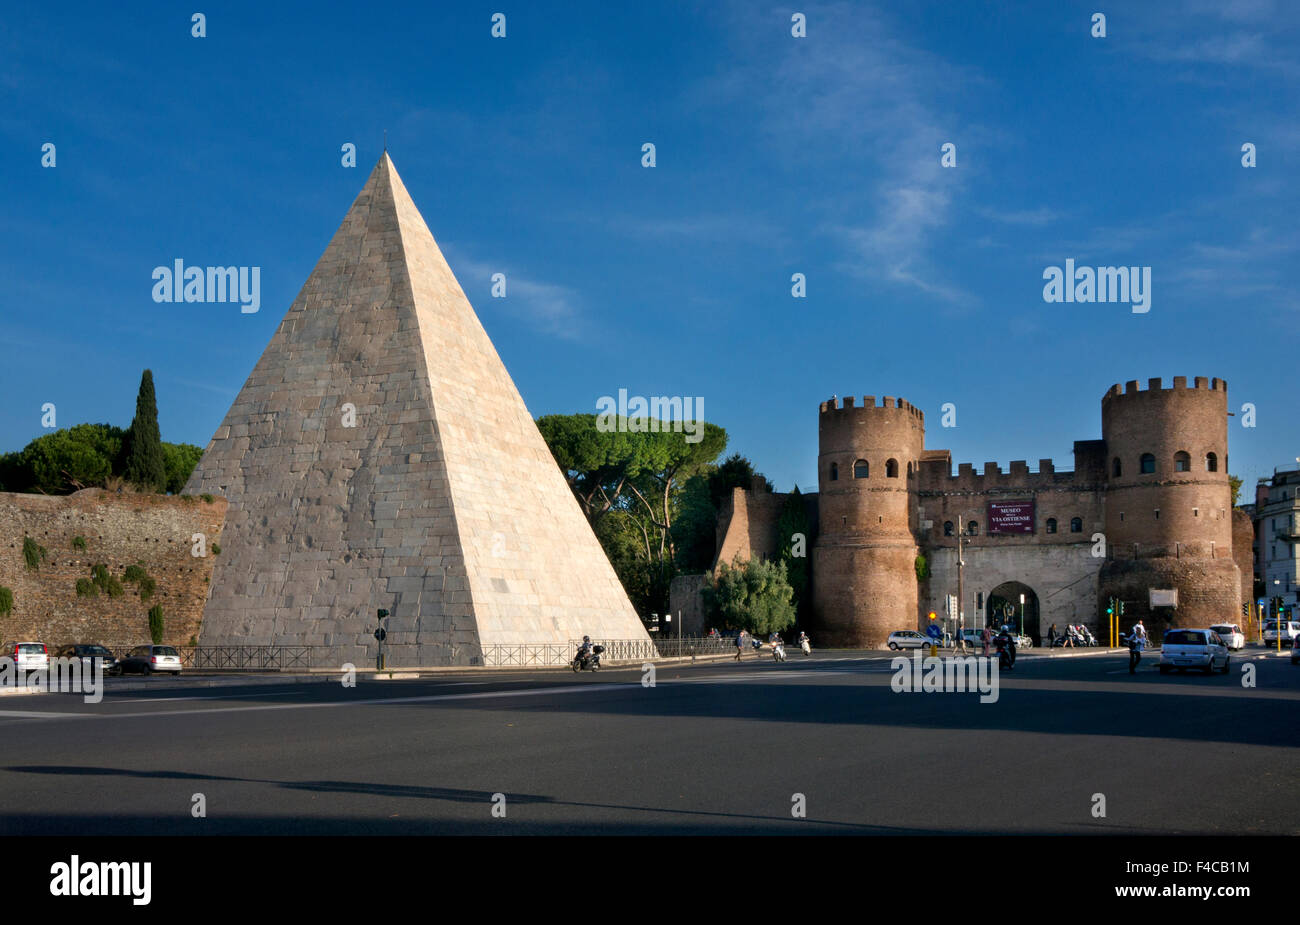 Pyramid of Cestius and Porta San Paolo gateway to city, Rome Italy Stock Photo